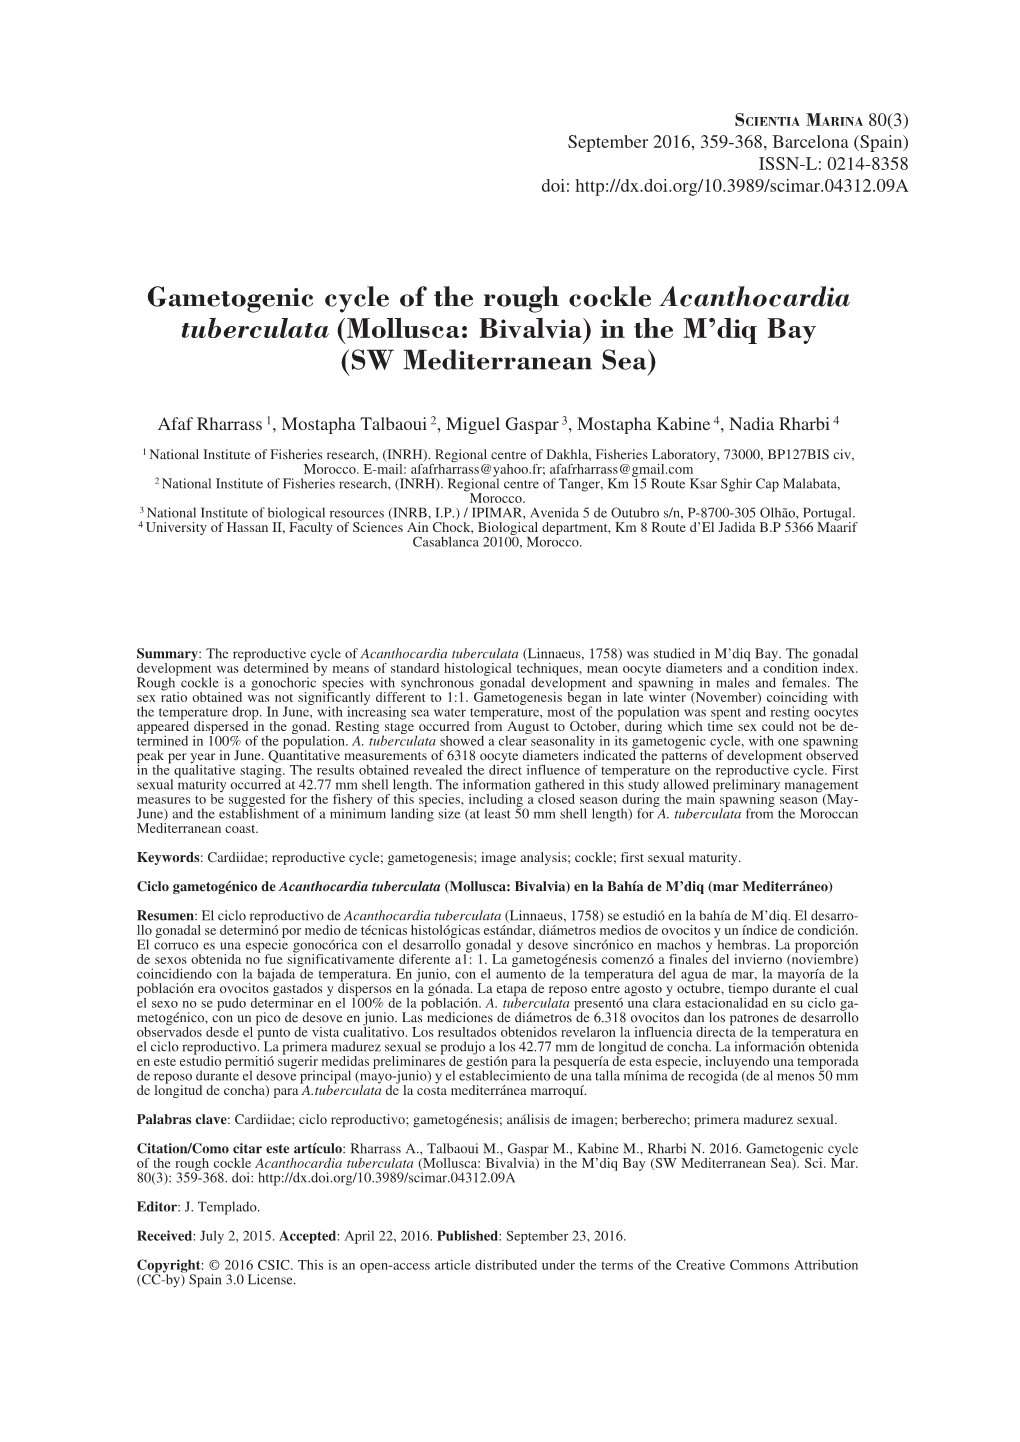 Gametogenic Cycle of the Rough Cockle Acanthocardia Tuberculata (Mollusca: Bivalvia) in the M’Diq Bay (SW Mediterranean Sea)